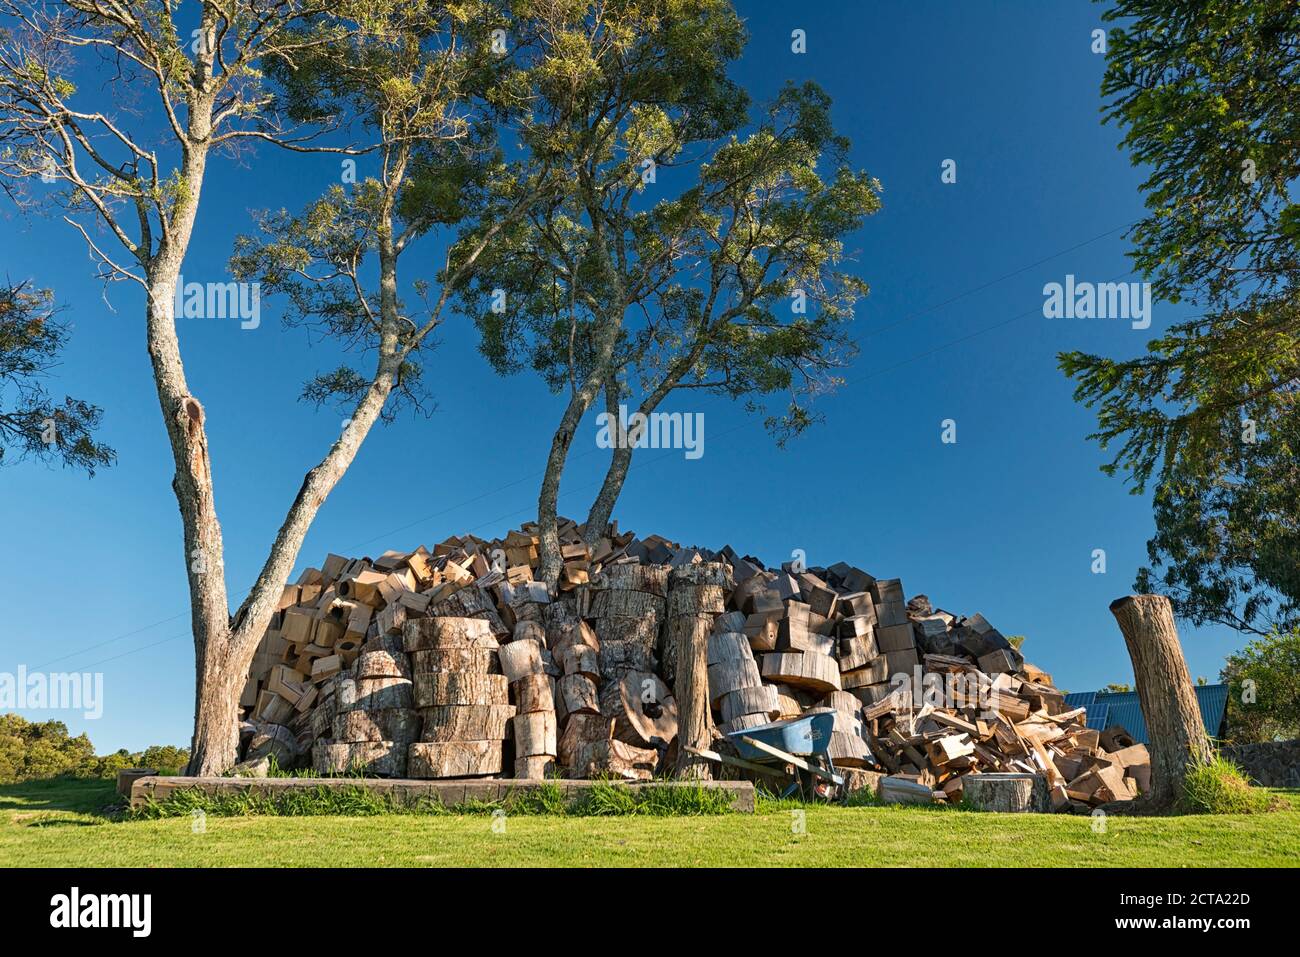 Australia, New South Wales, Dorrigo, pile of fire wood under trees Stock Photo